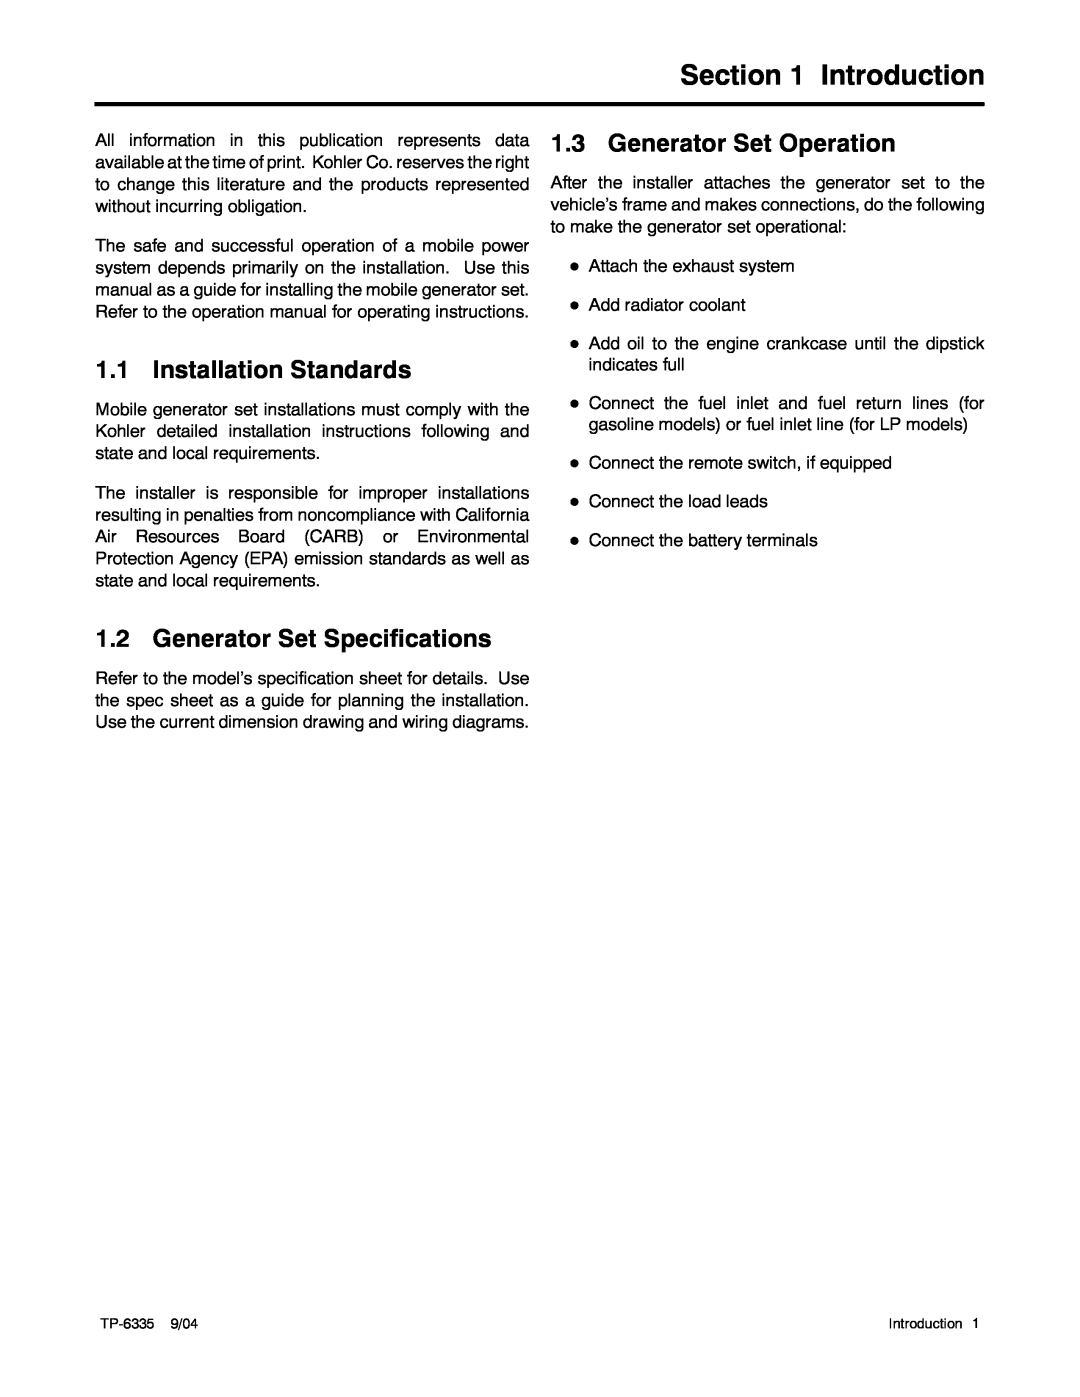 Kohler 10ERG, 15ERG, 13ERG manual Introduction, Installation Standards, Generator Set Operation, Generator Set Specifications 